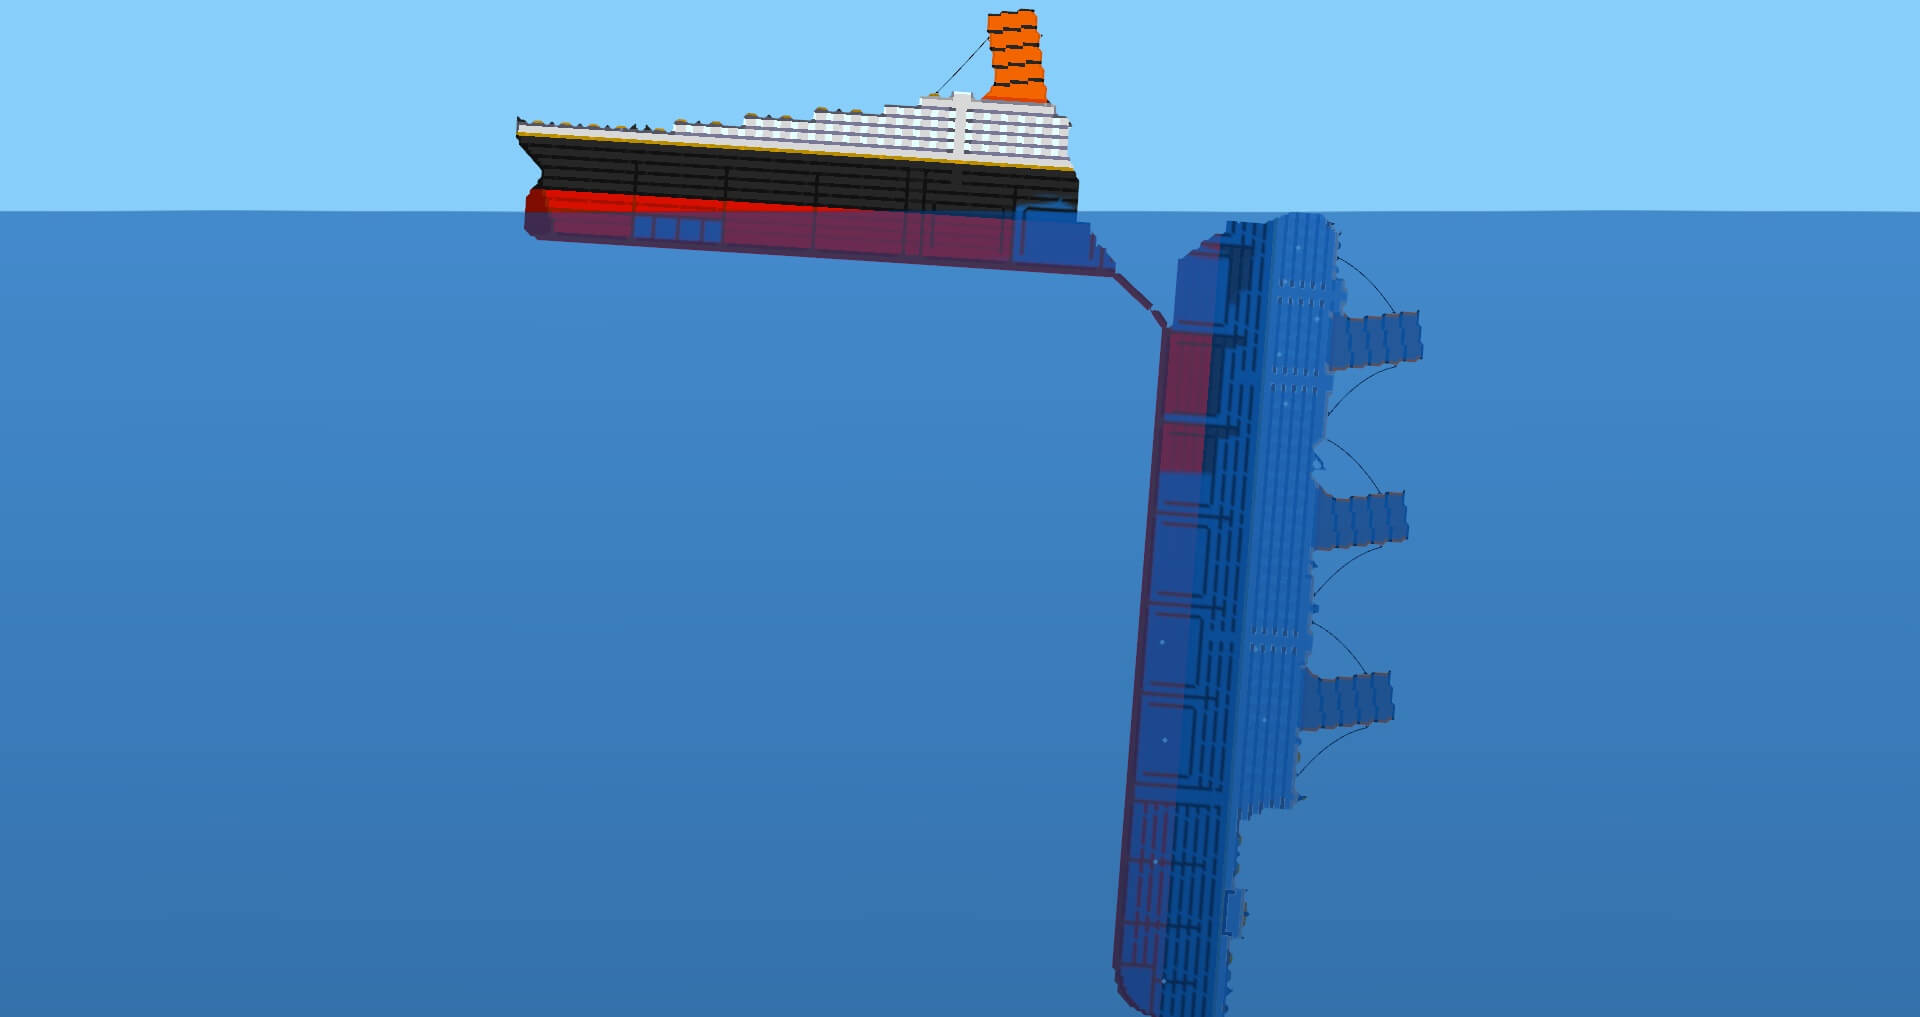 sinking ship simulator download windows 8